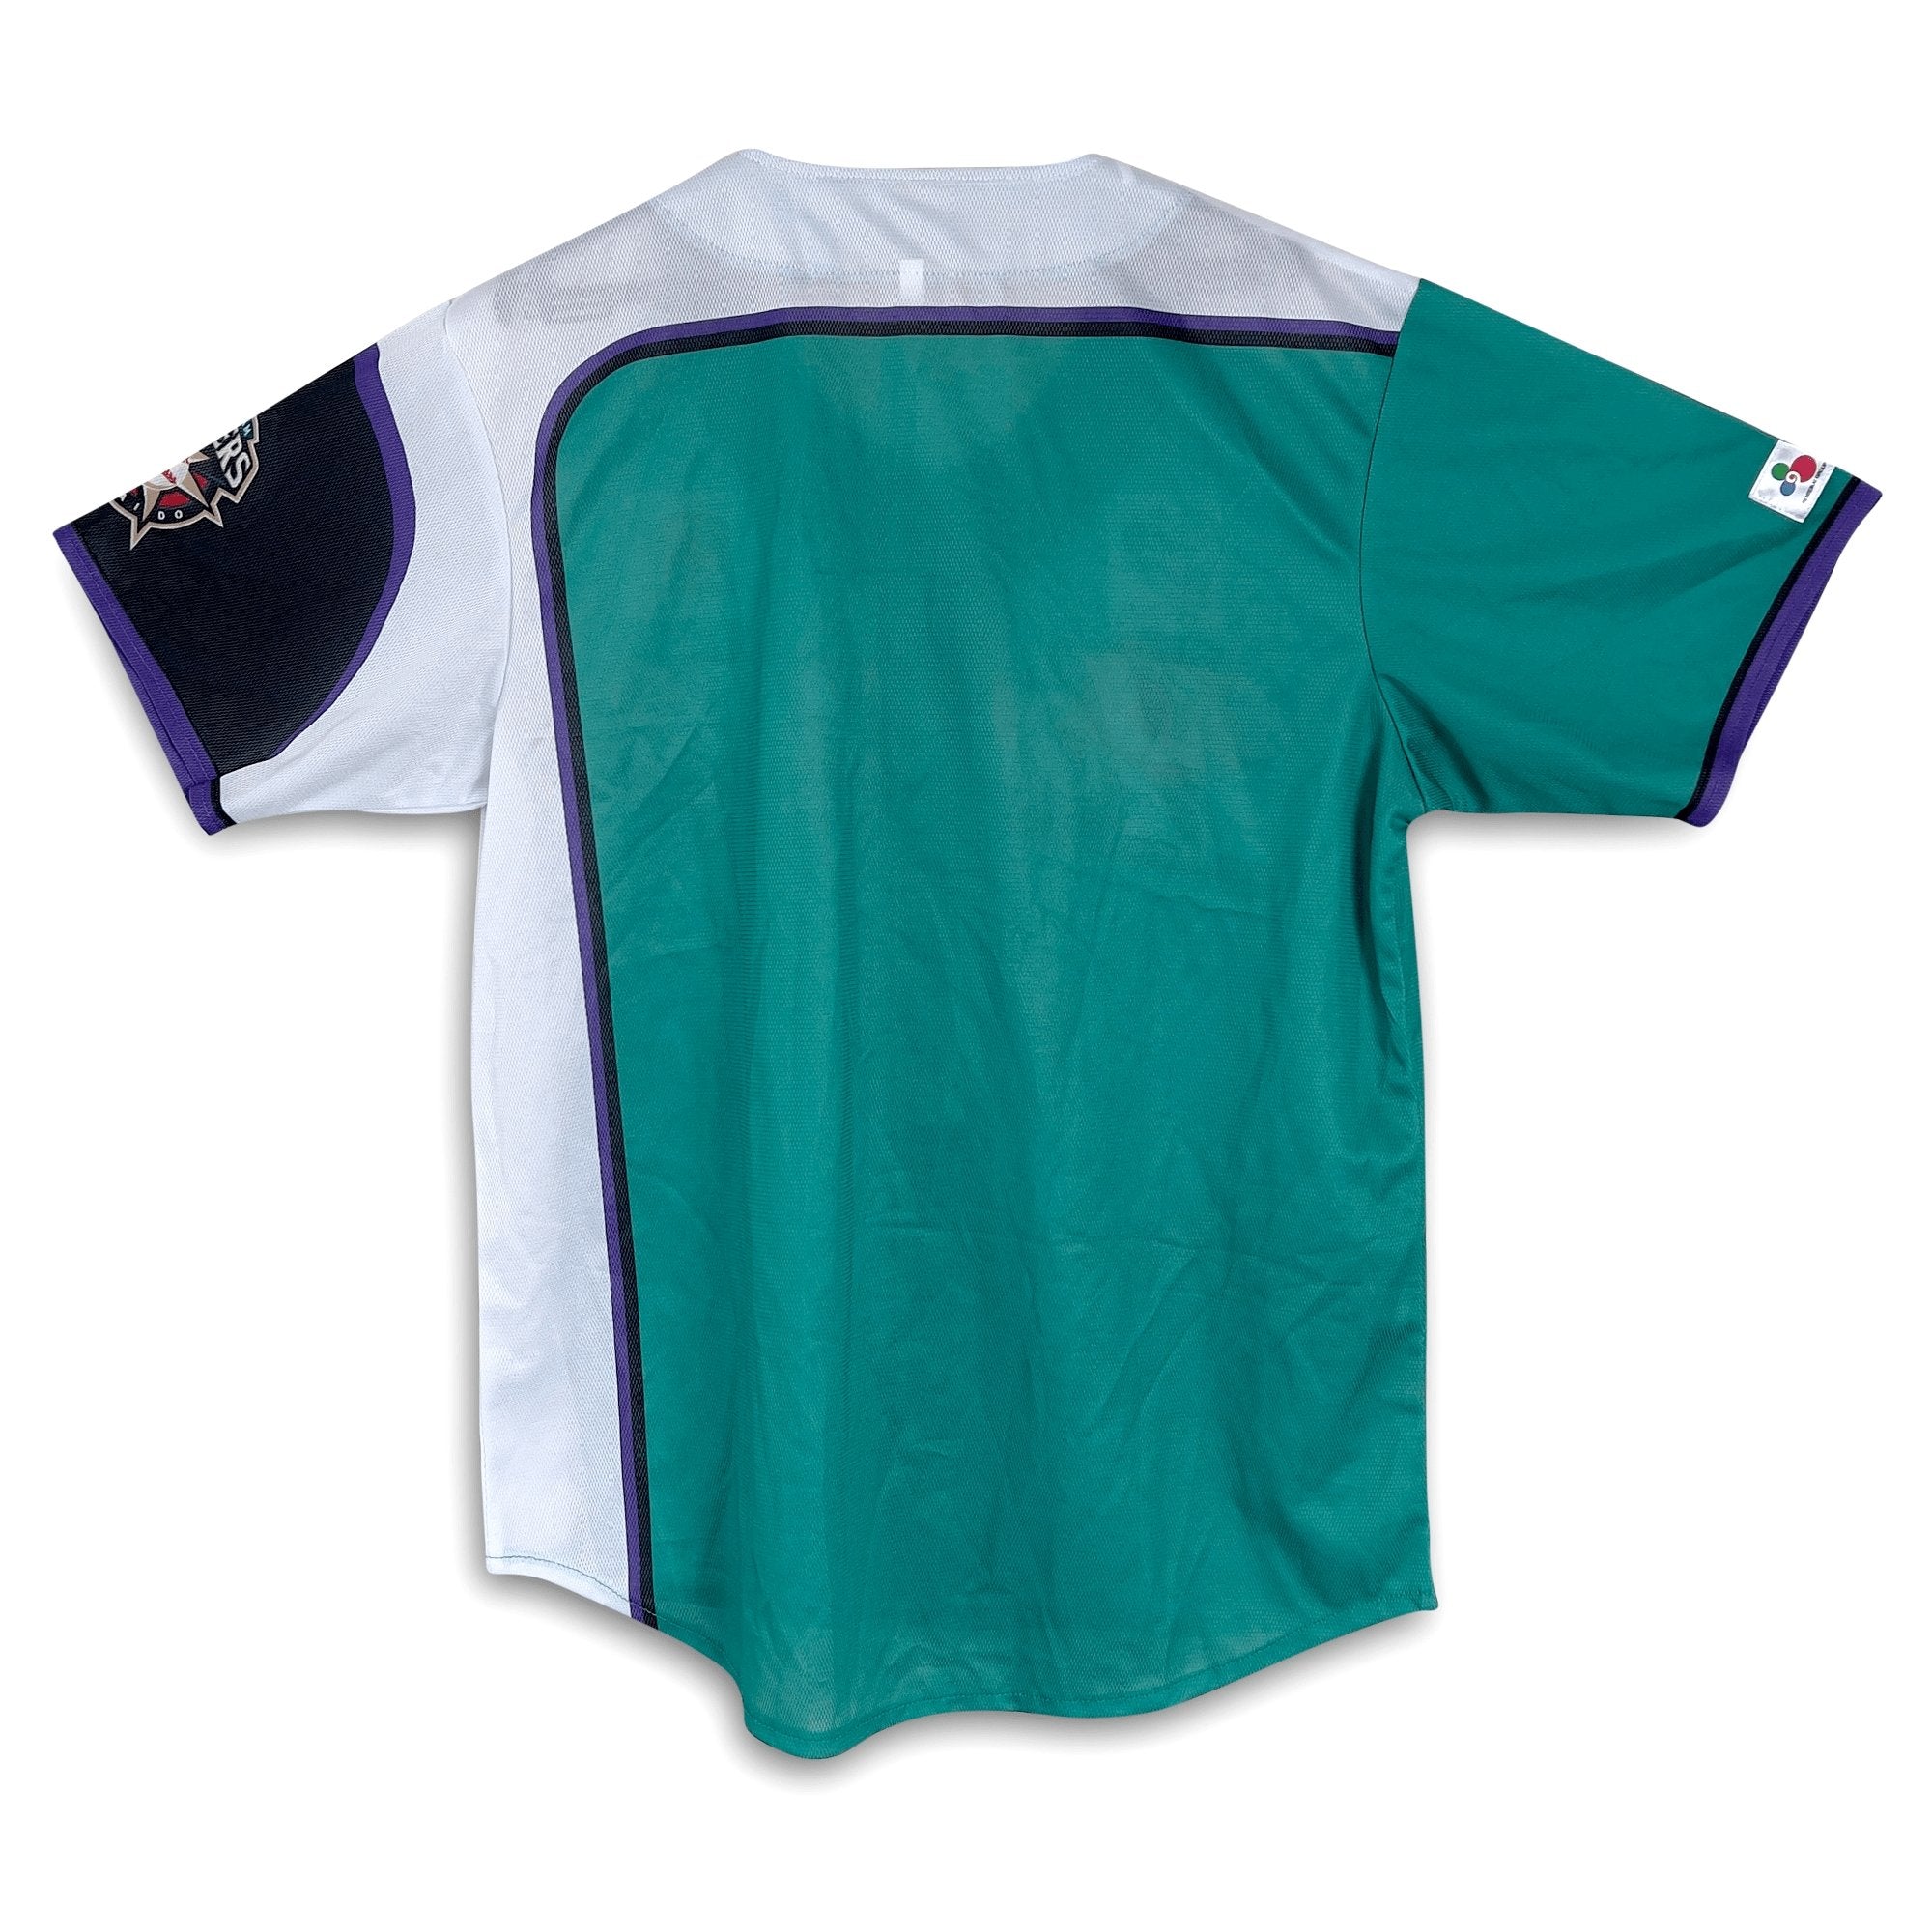 Hokkaido Nippon-Ham Fighters Baseball Jersey Includes Patch